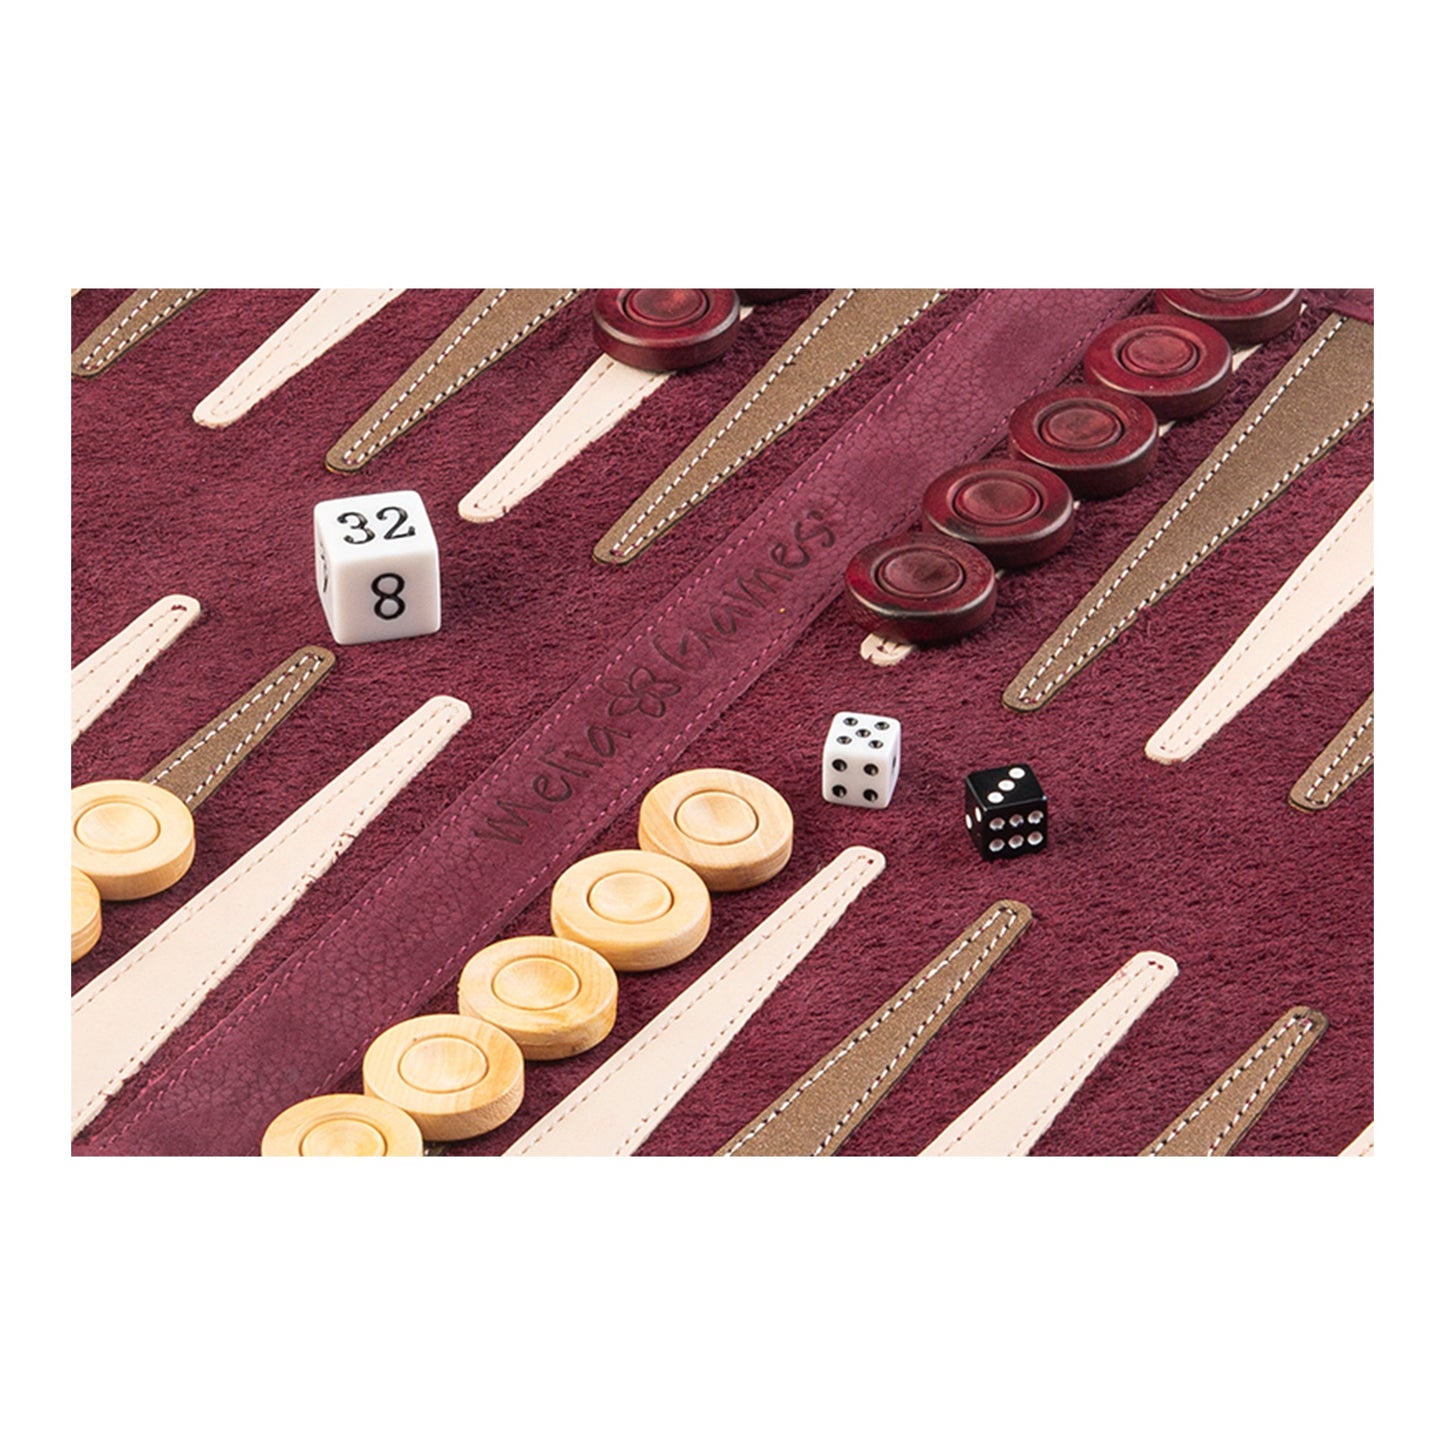 Roll up Leather Backgammon Set - Bordeaux - Travel